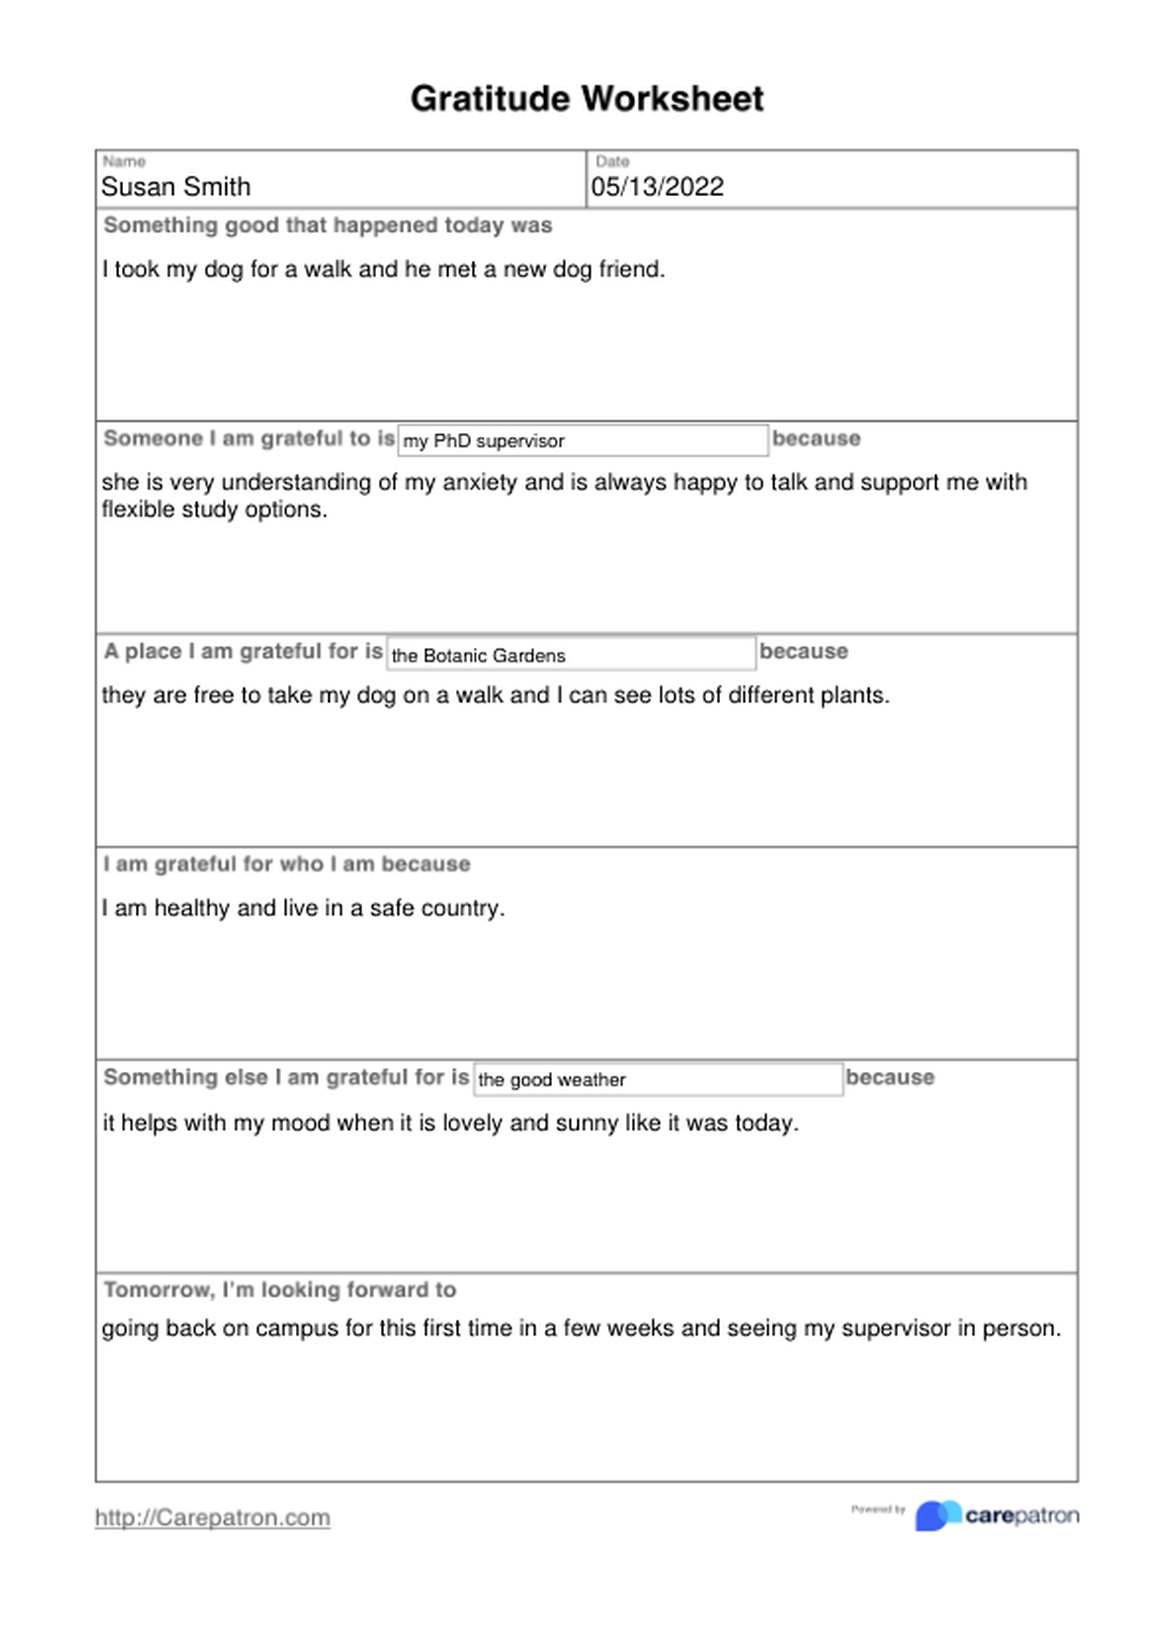 Gratitude Worksheets PDF Example